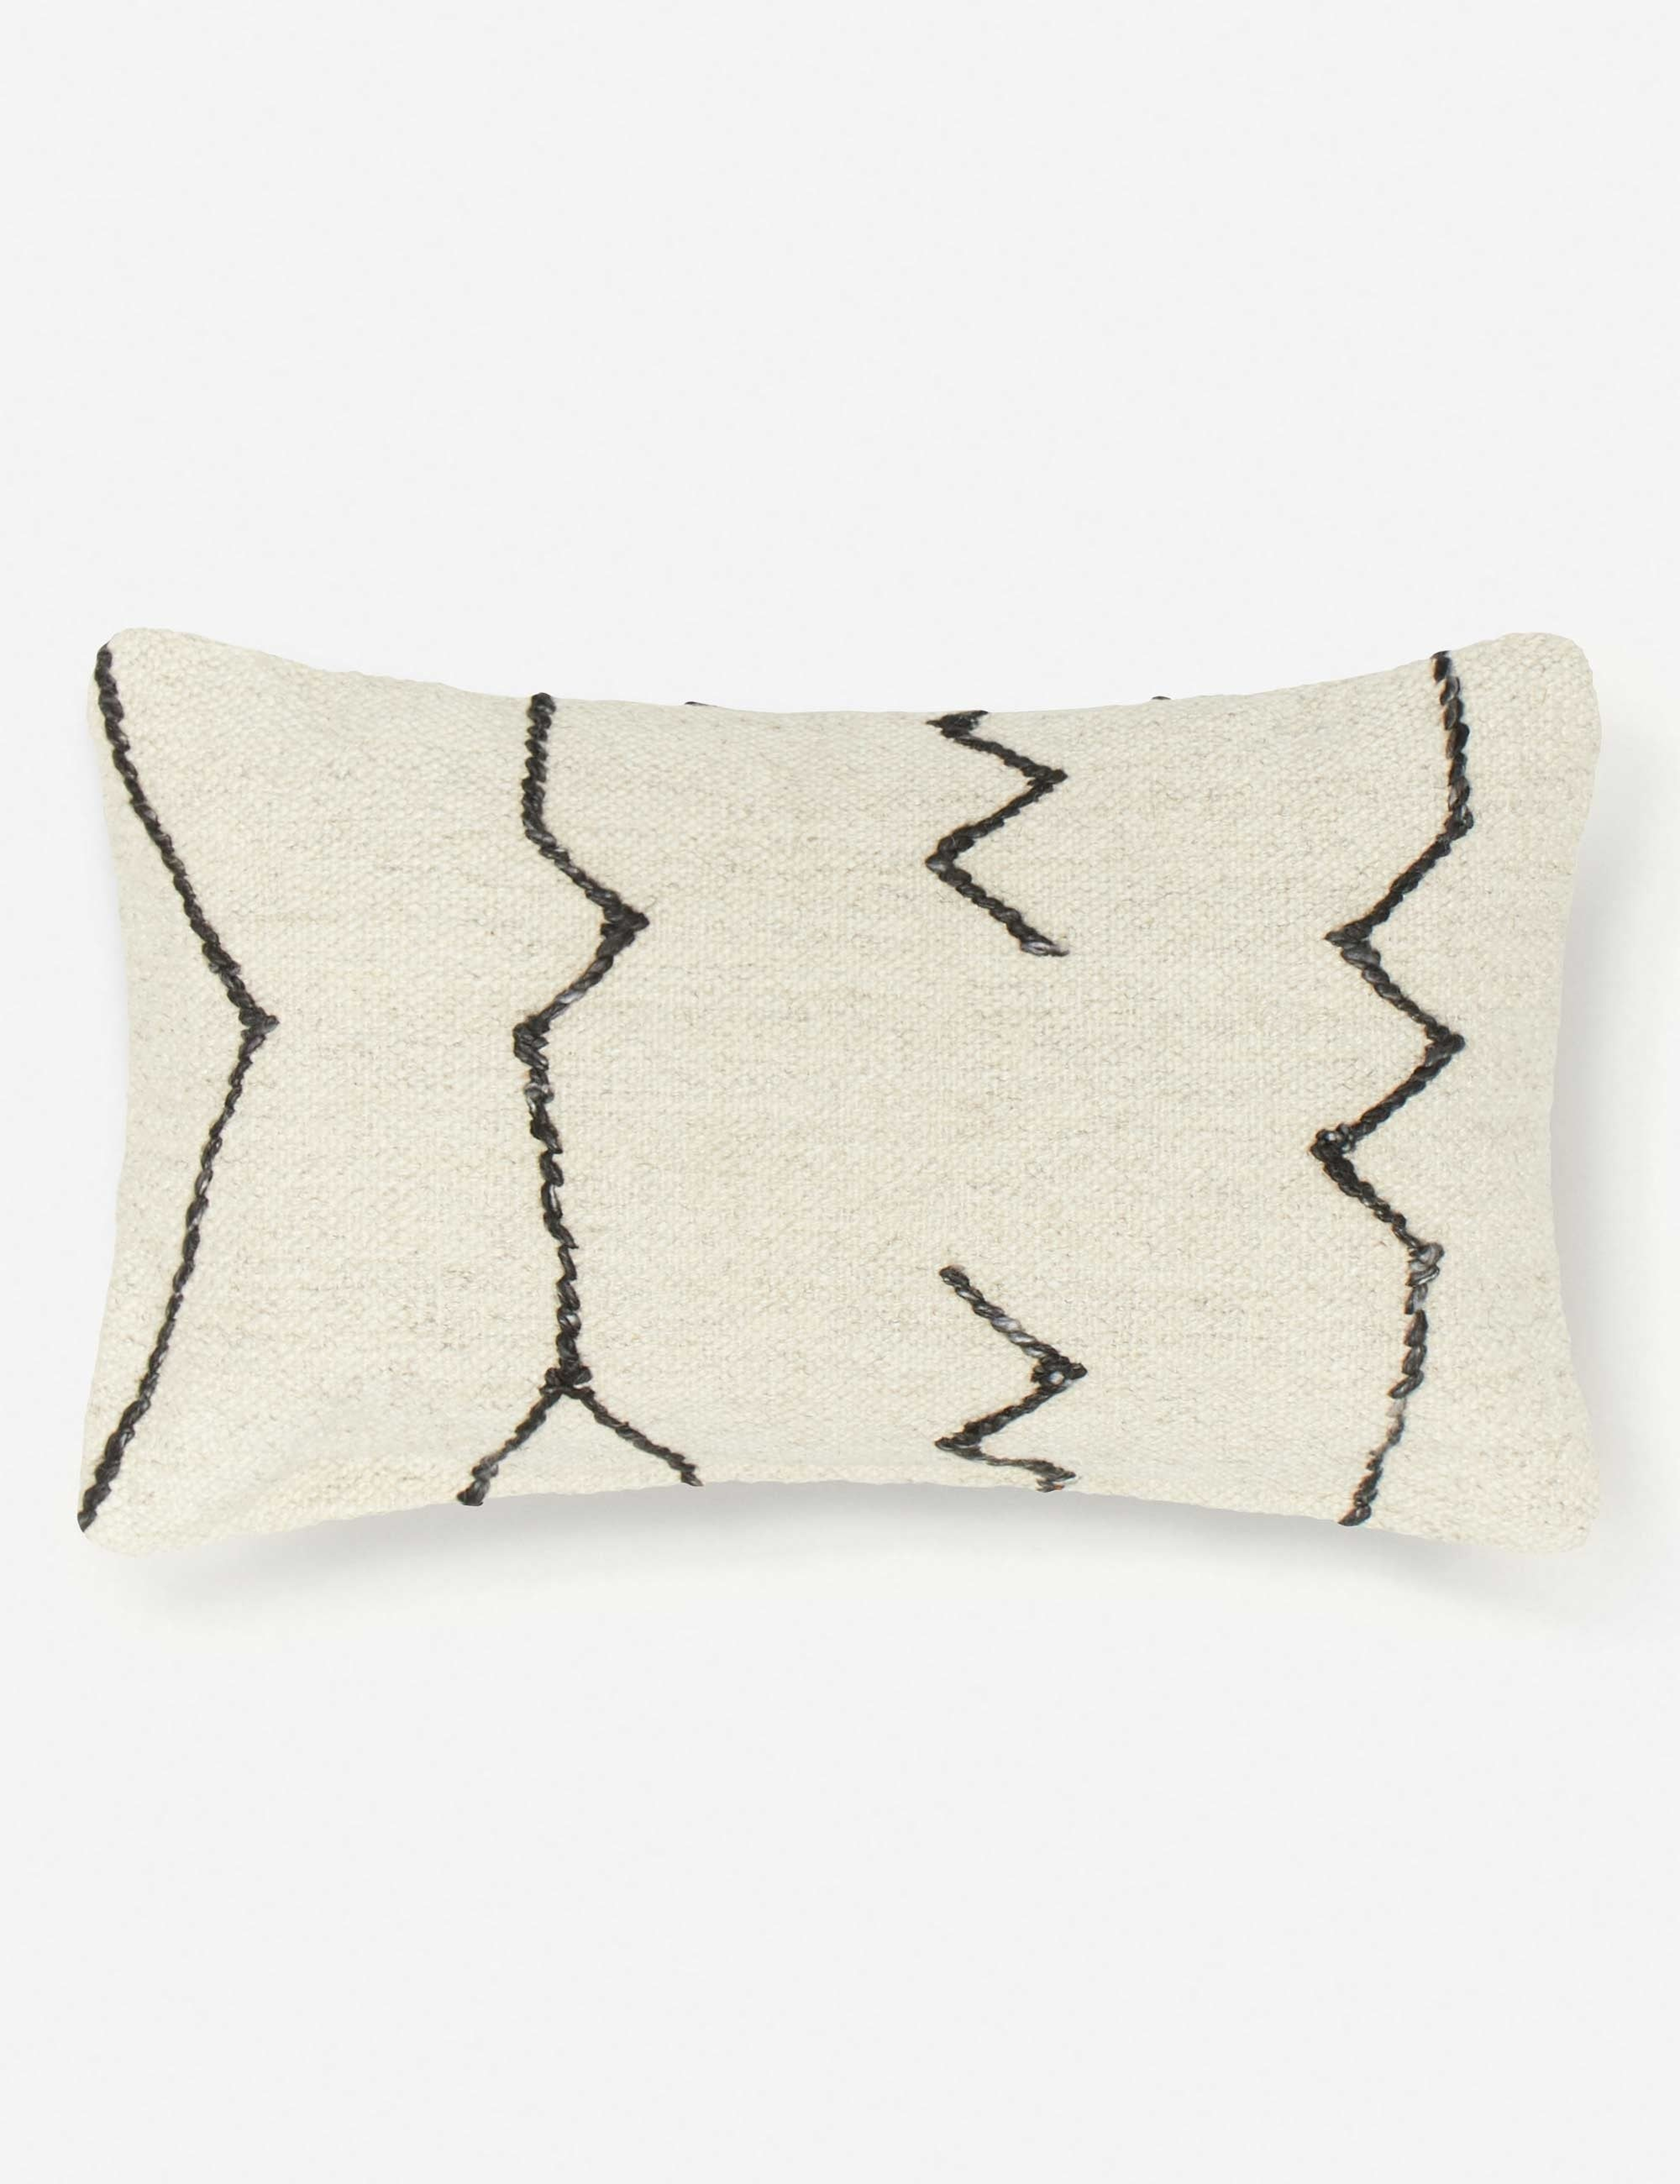 Moroccan Flatweave Pillow By Sarah Sherman Samuel - Black and Natural / 12" x 20" - Lulu and Georgia